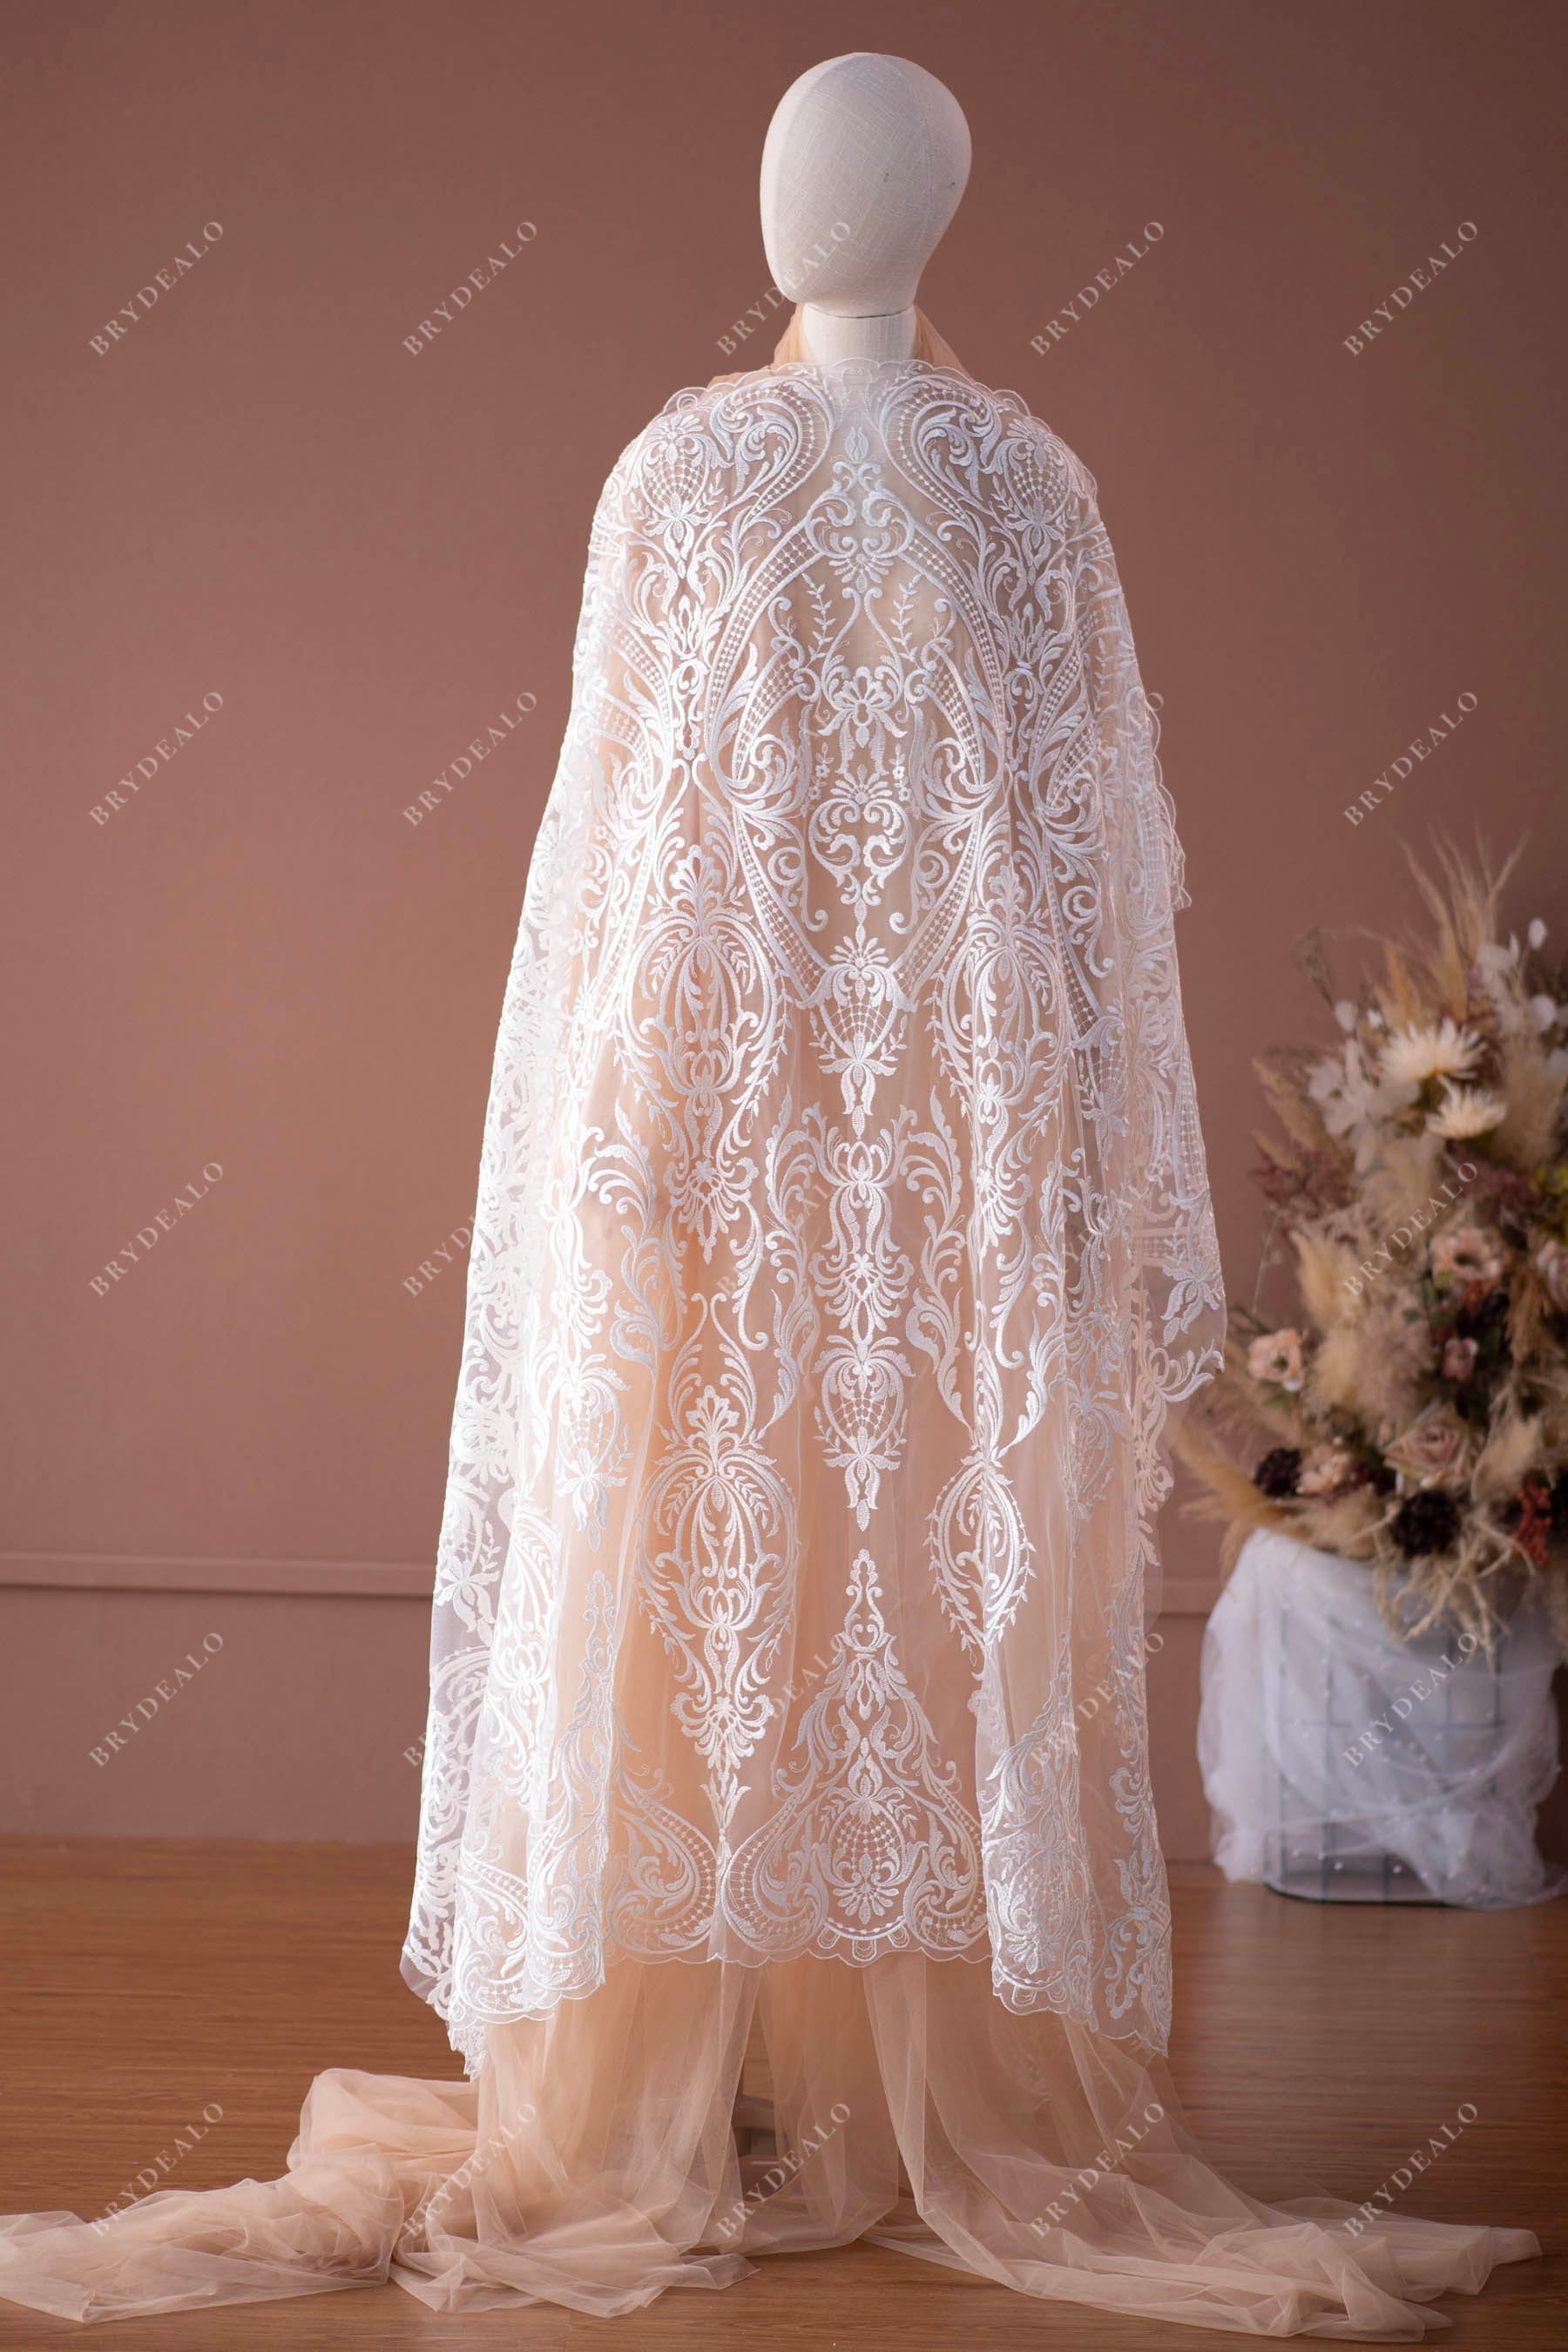 best patterned symmetrical lace fabric online